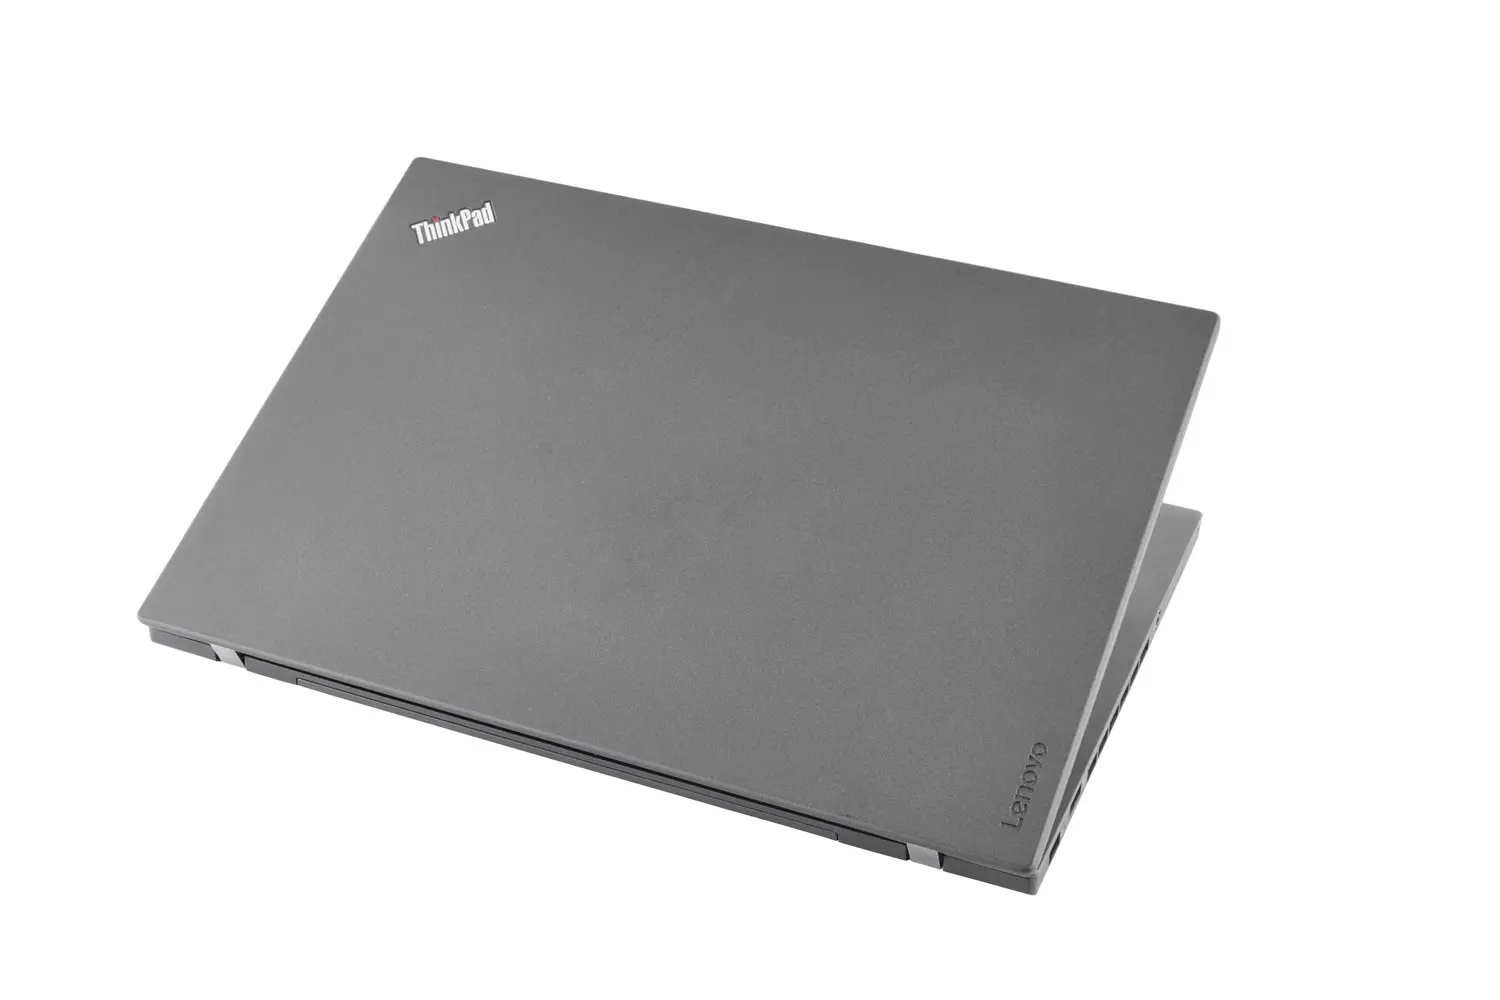 Lenovo ThinkPad T460p, i5, 14 Zoll Full-HD IPS, 8GB, 500GB SSD, Webcam, beleuchtete Tastatur, Windows 10 Pro